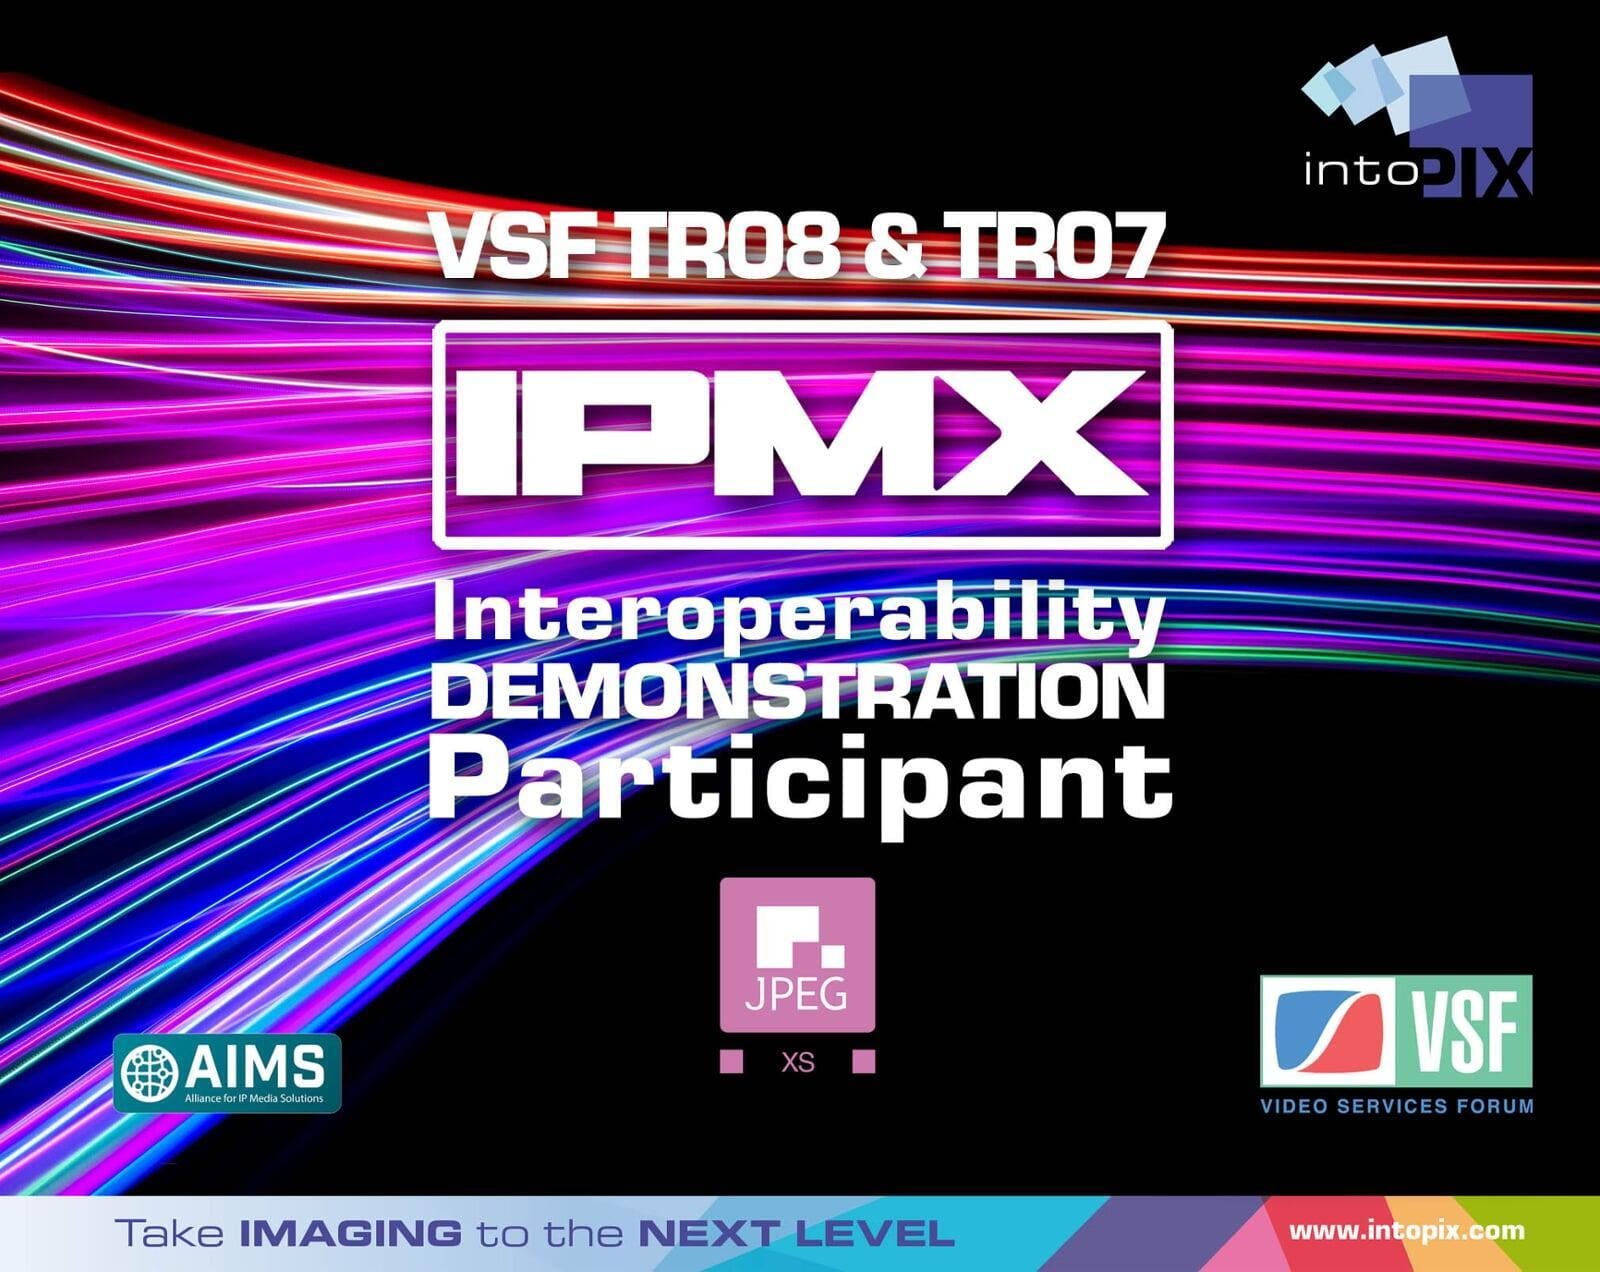 intoPIX takes part in Major VSF Interoperability Demonstrations at VidTrans 2022